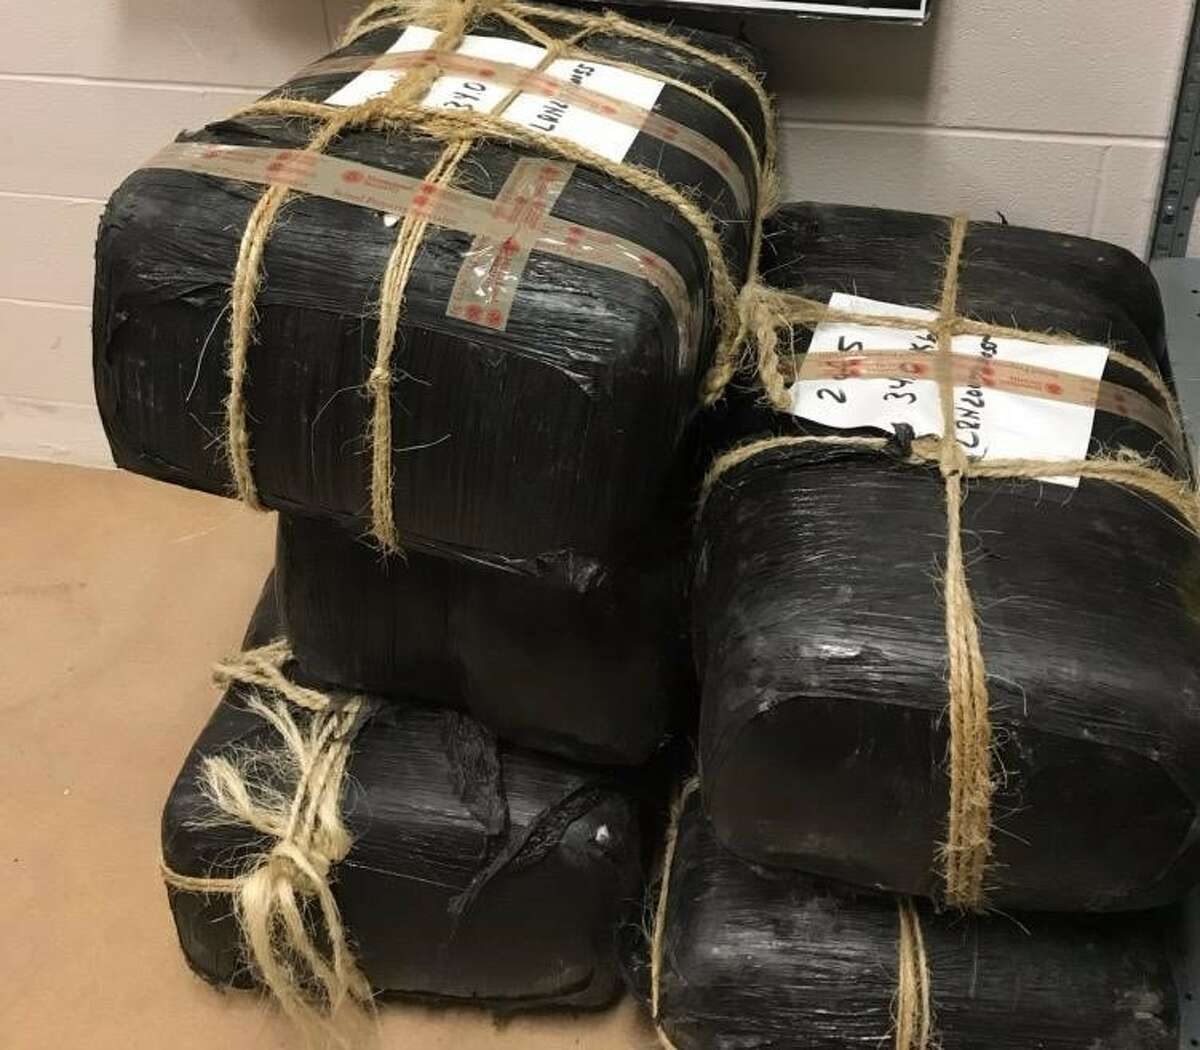 Border Patrol seized 345.4 pounds of marijuana.